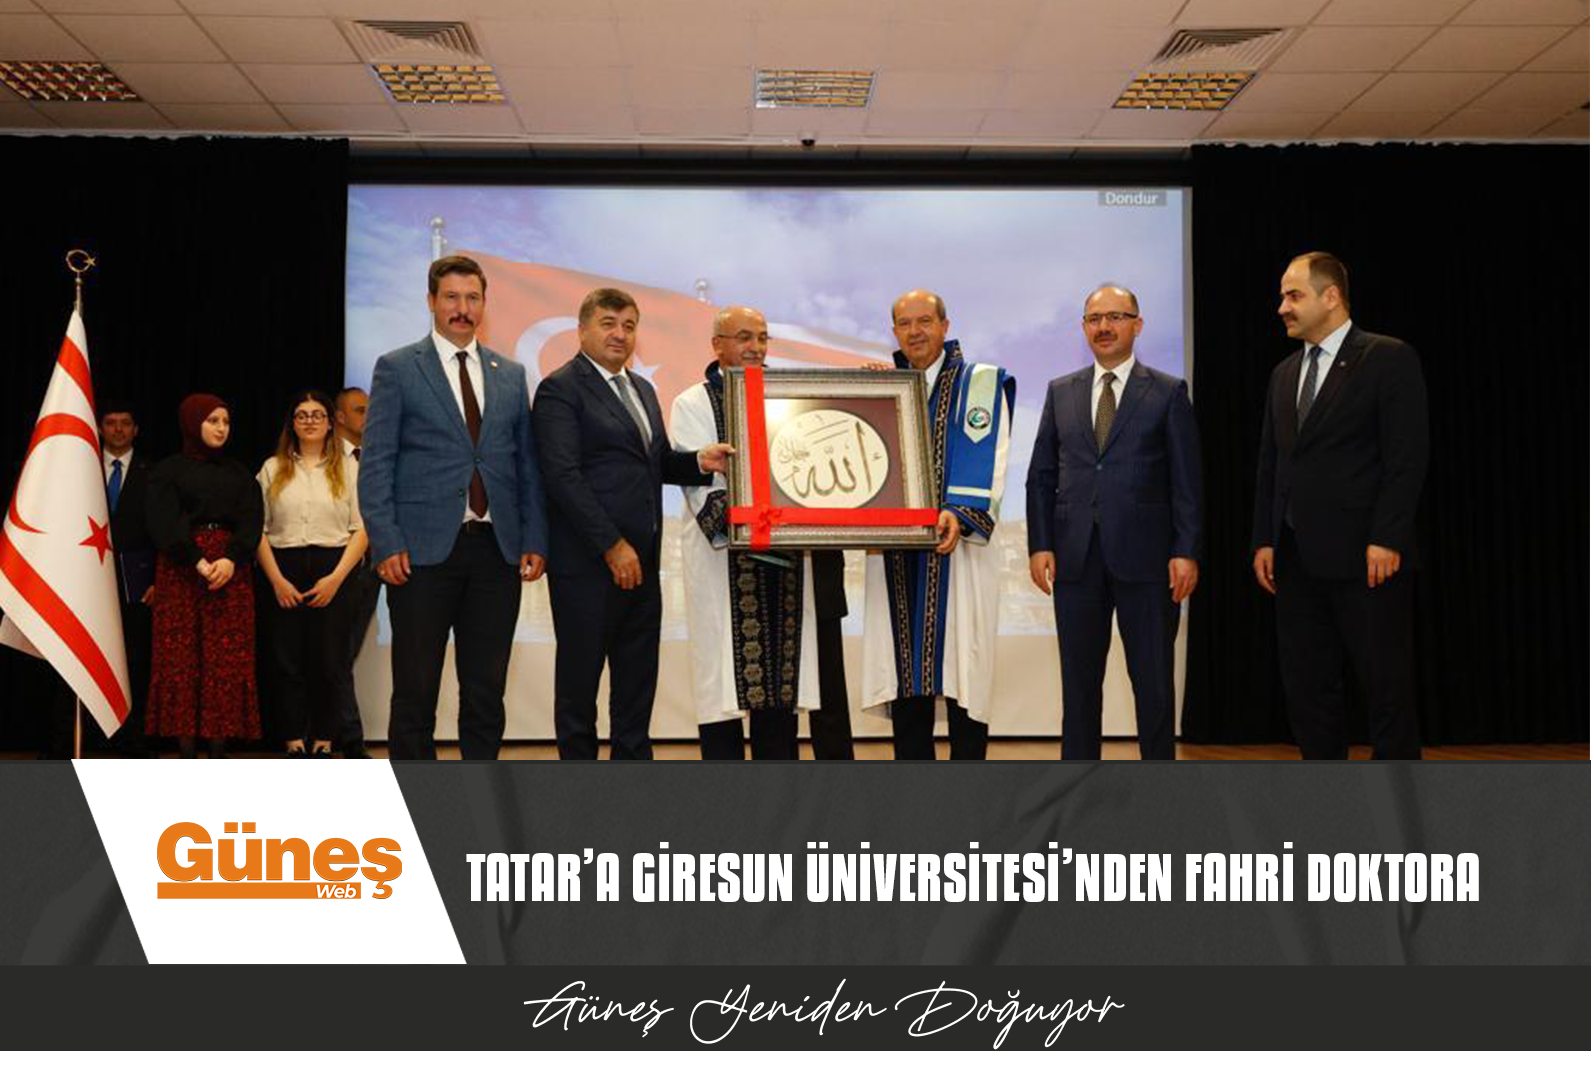 Tatar’a, Giresun Üniversitesi’nde fahri doktora